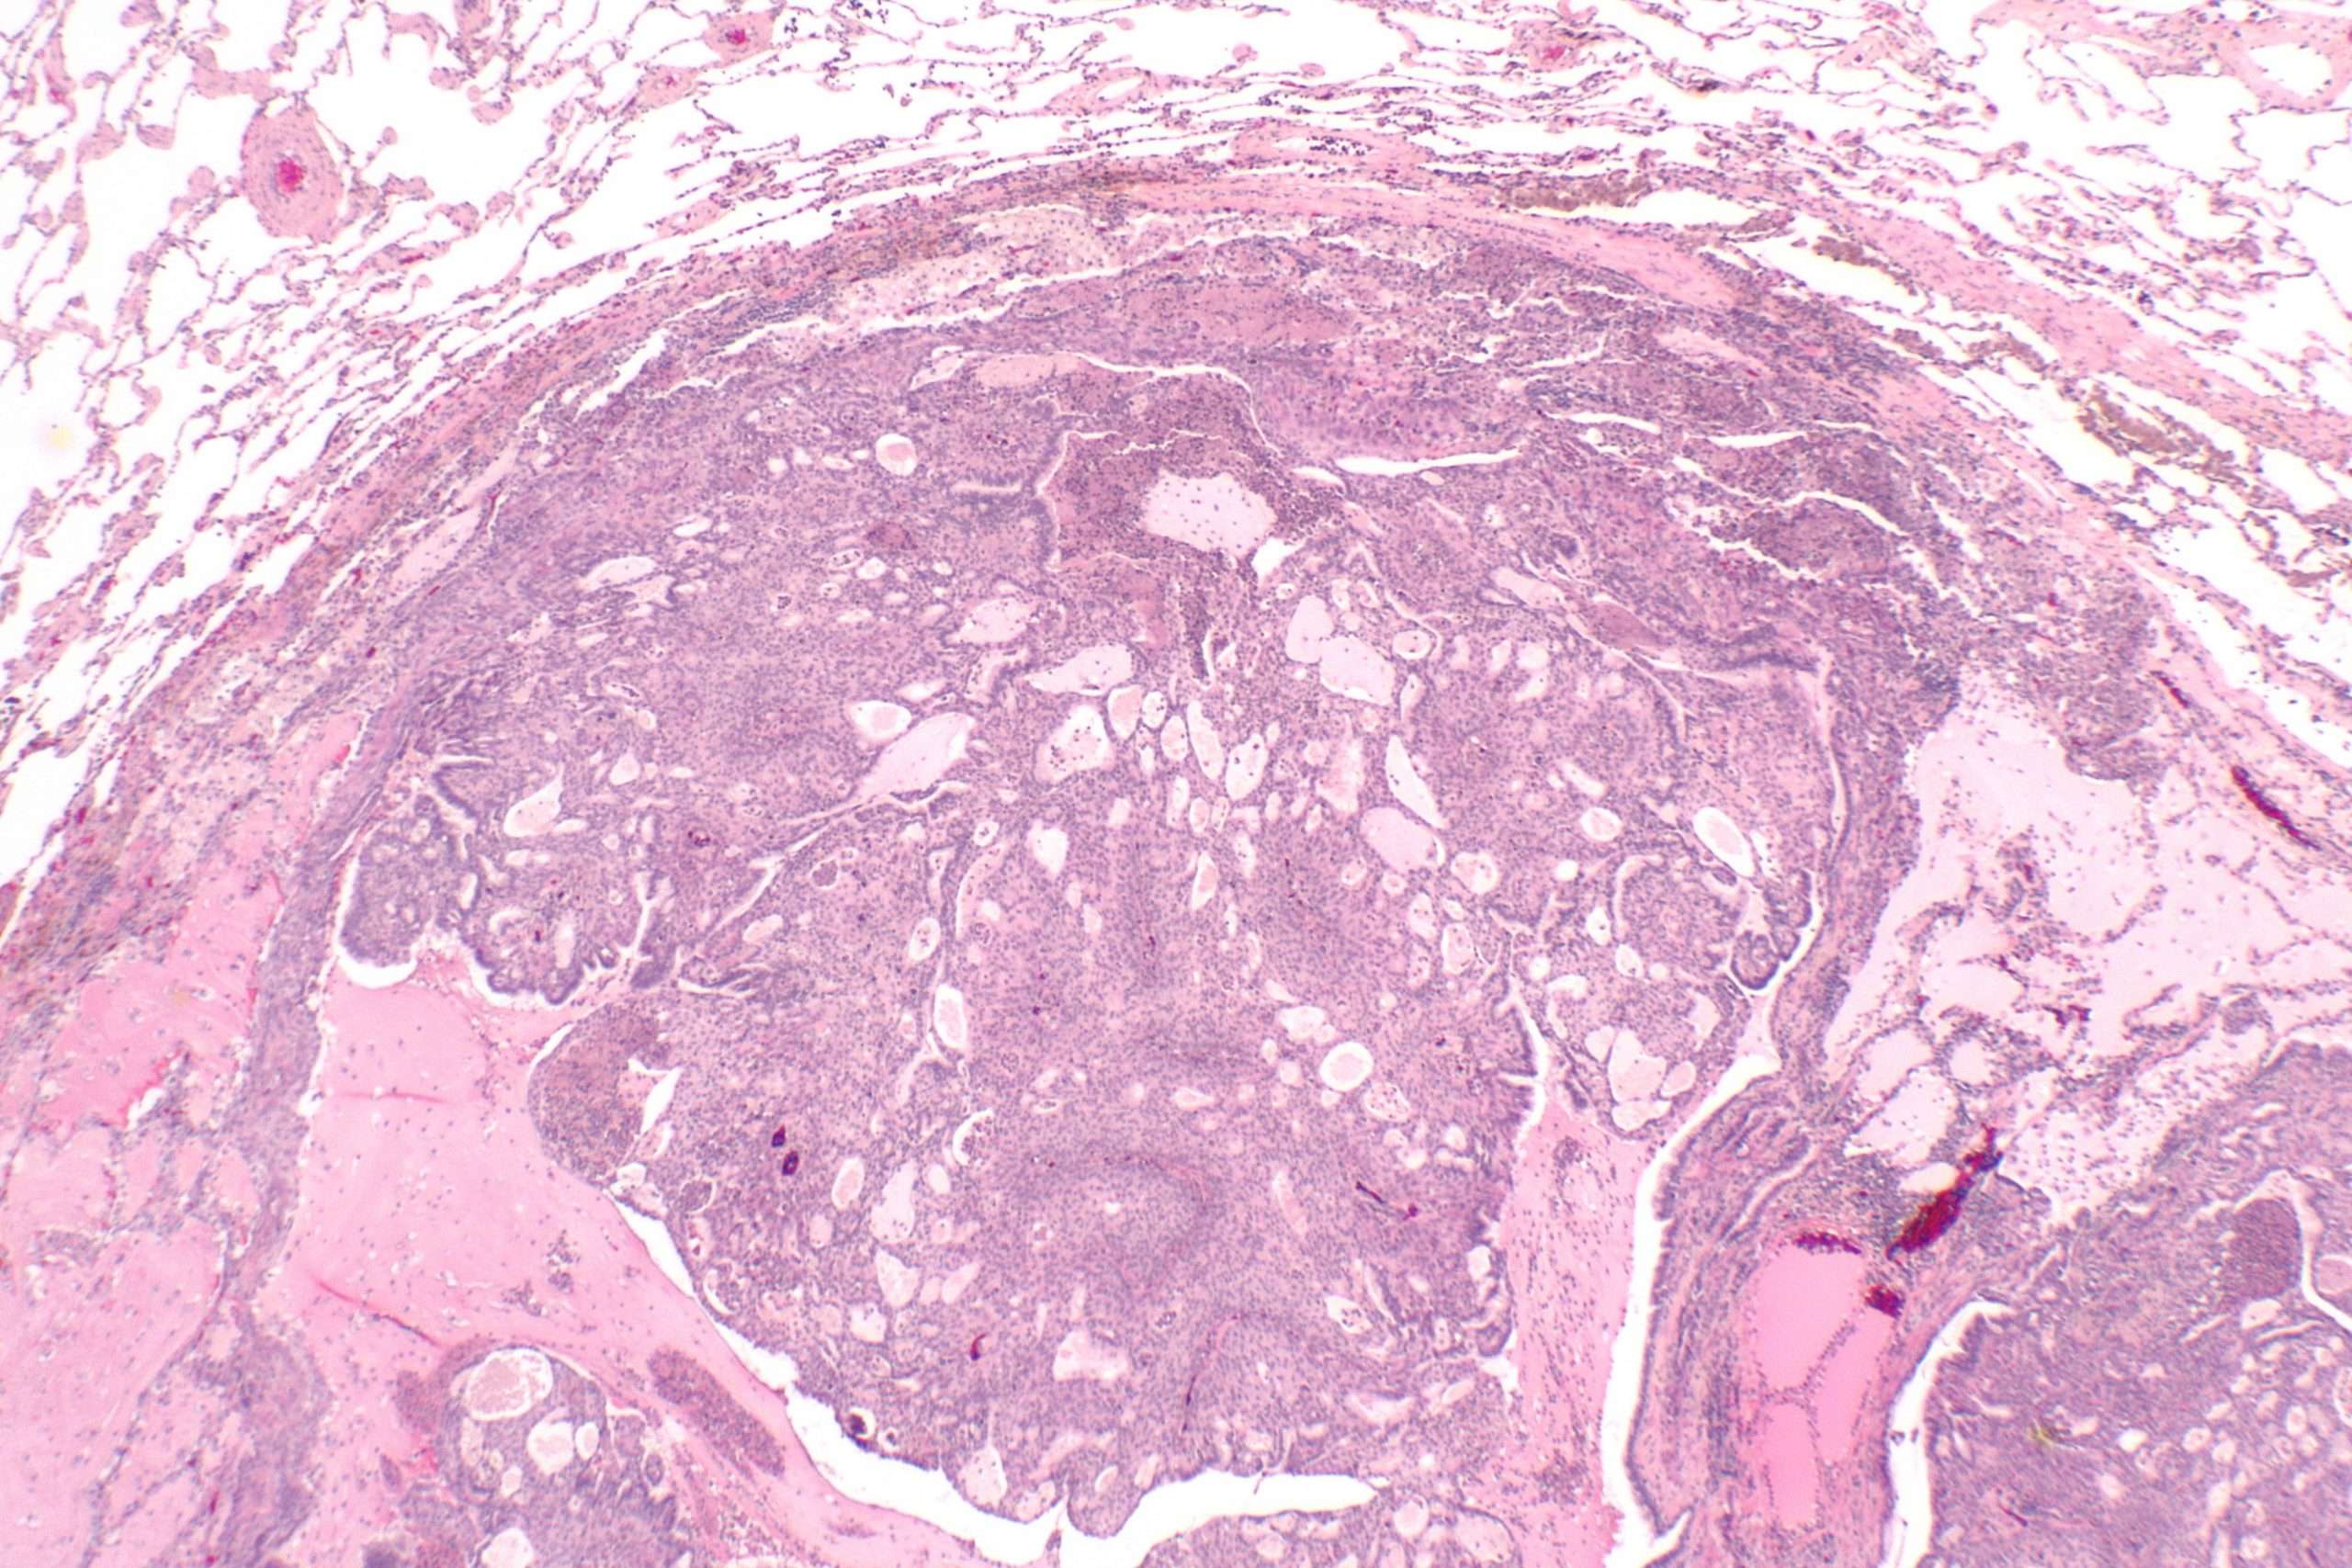 Pulmonary Mixed Squamous Cell and Glandular Papilloma